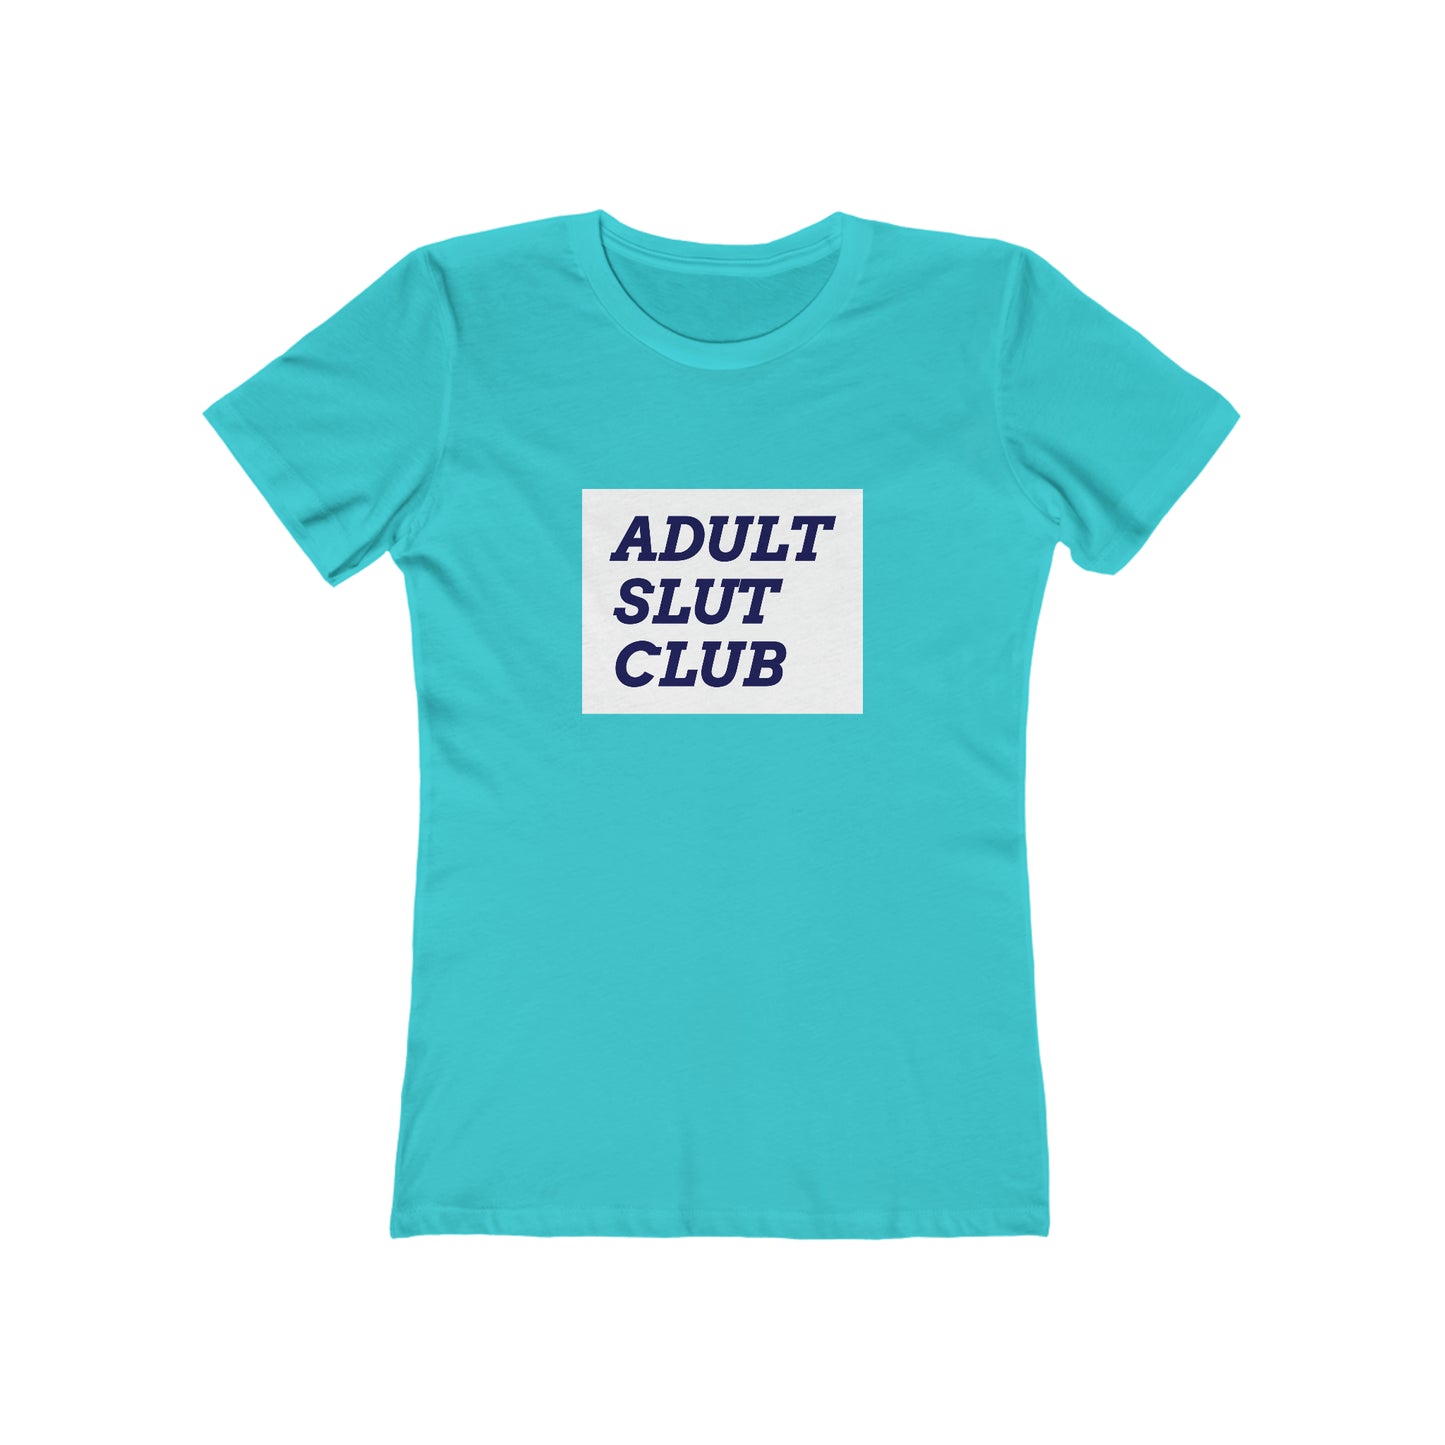 Adult Slut Club - Women's T-shirt